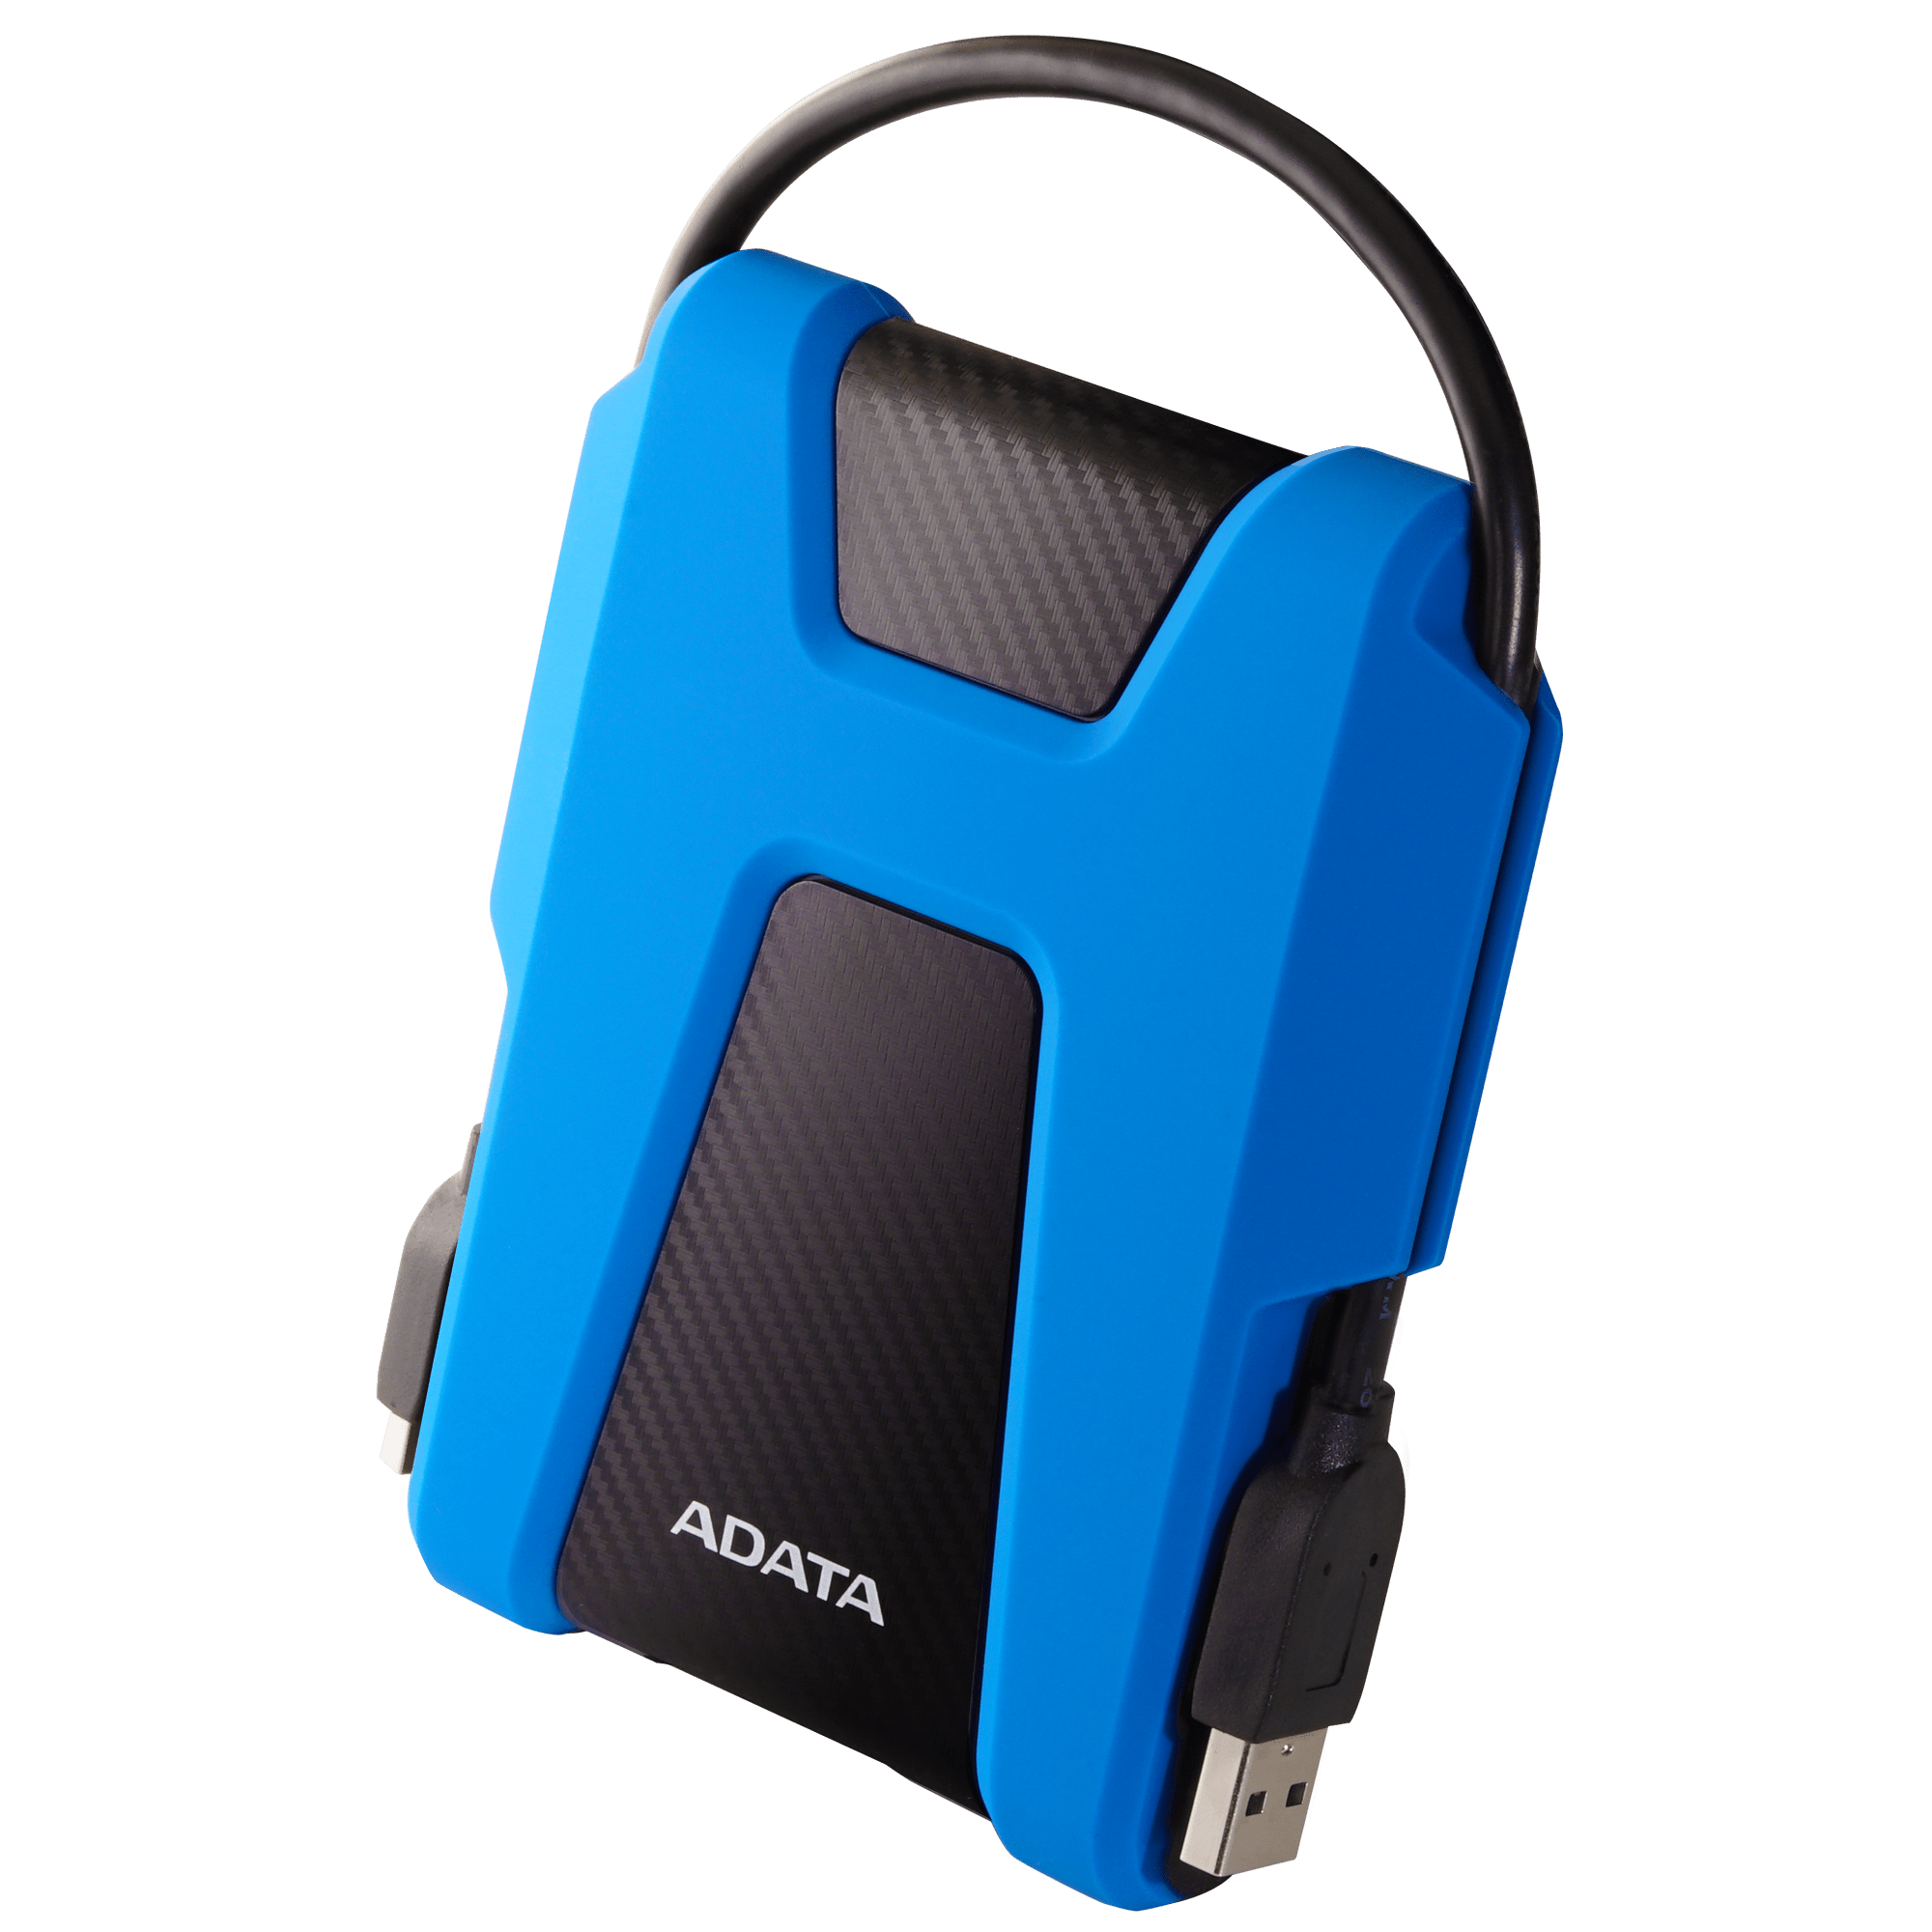 ADATA HD680 (USB 3.2 | Shock Absorbing | Detachable USB Cable)